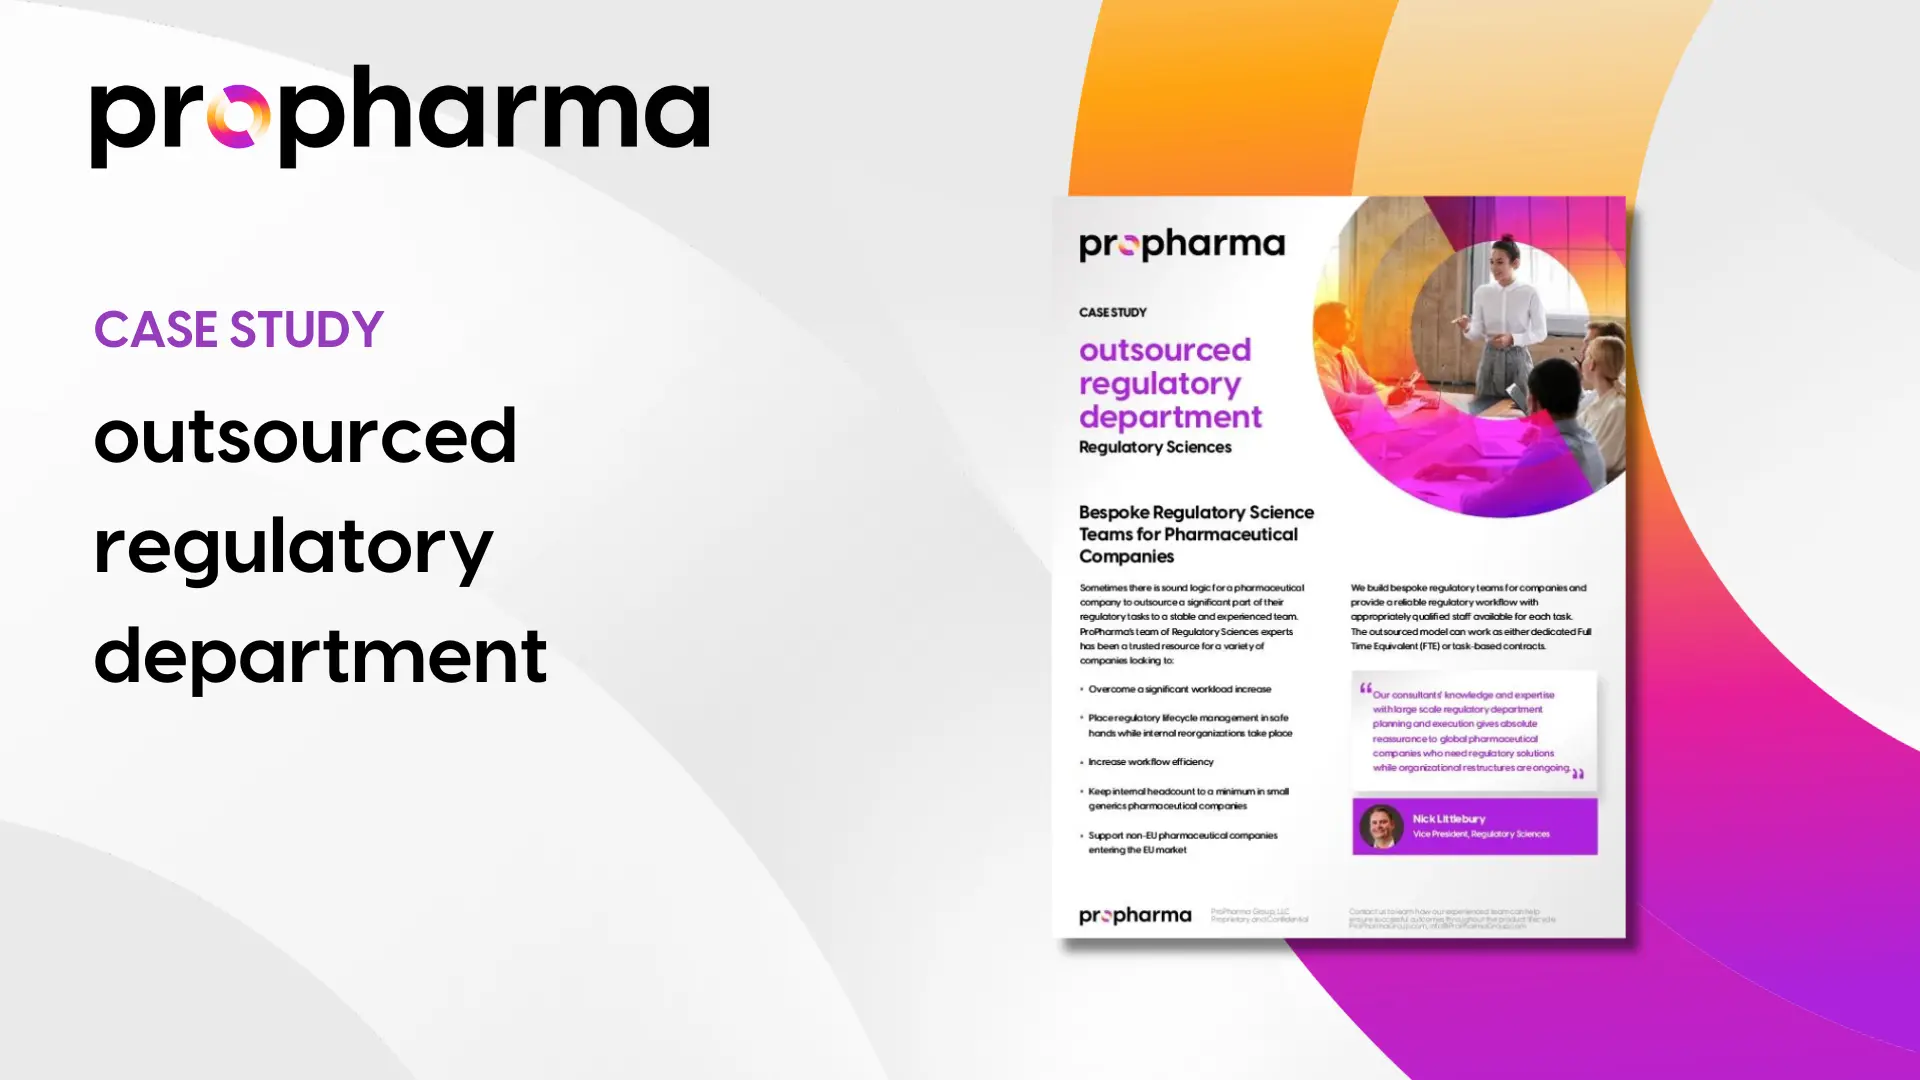 Bespoke Regulatory Sciences Teams for Pharmaceutical Companies - ProPharma